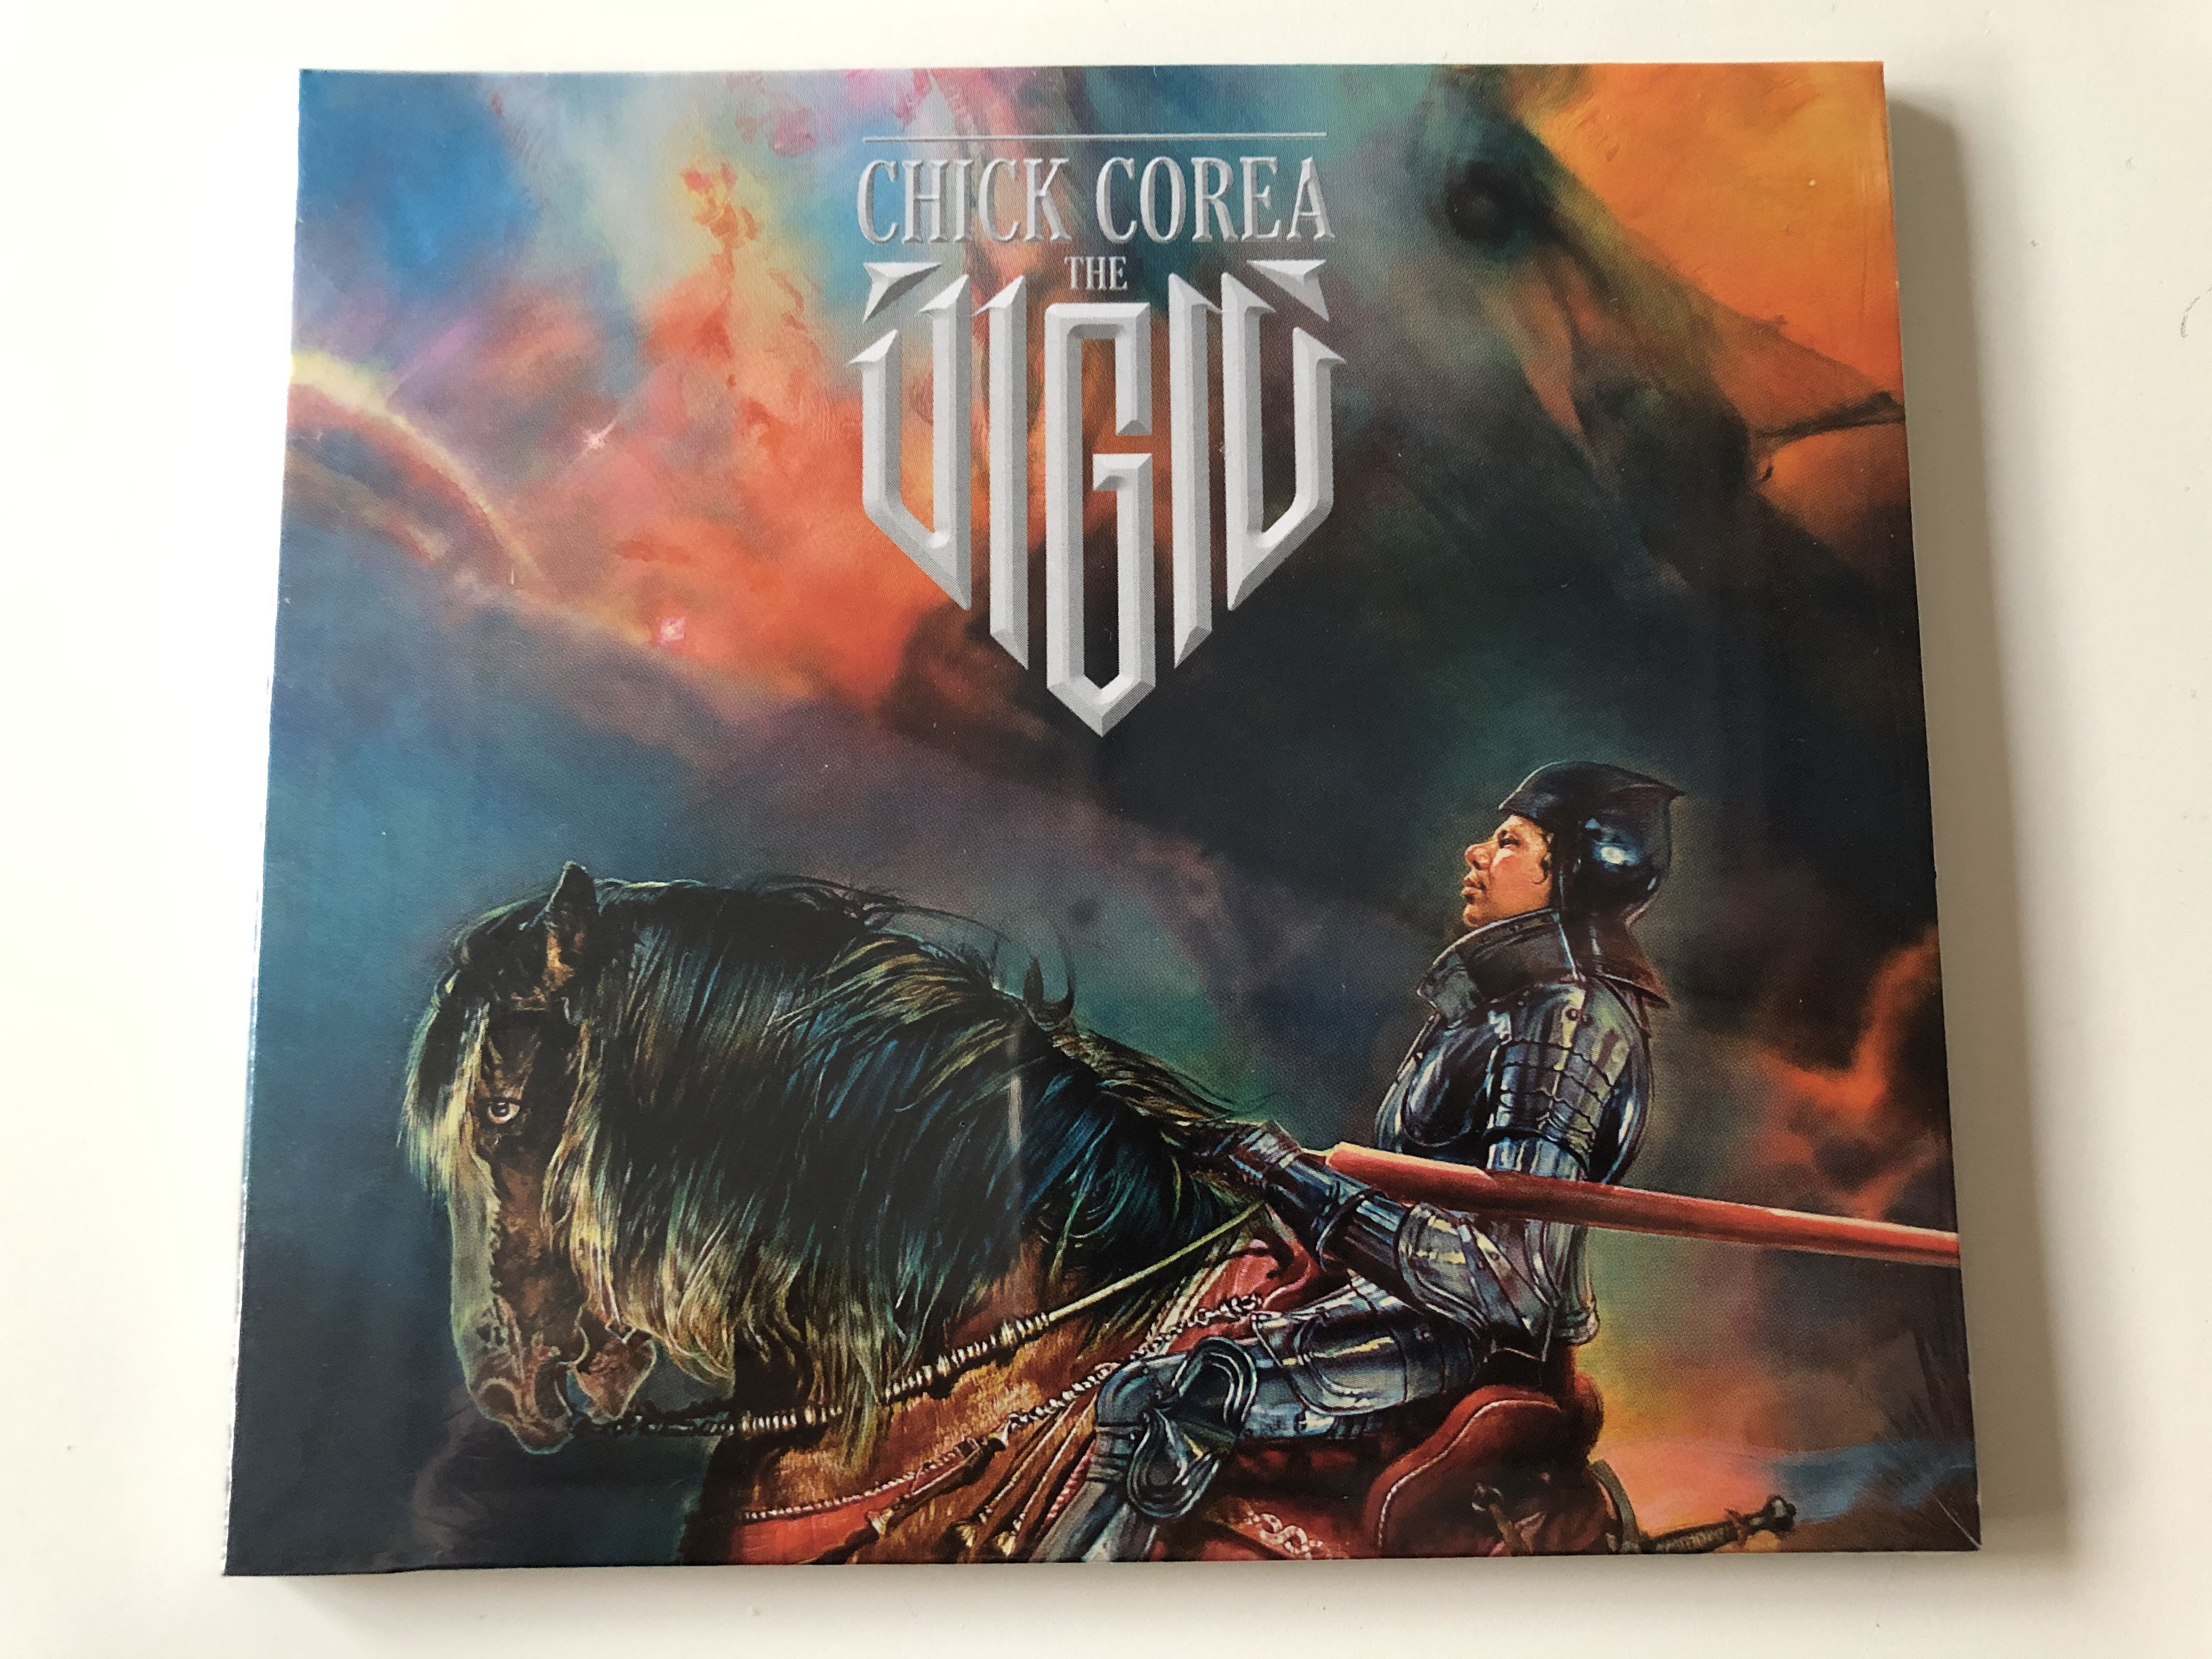 chick-corea-the-vigil-concord-jazz-audio-cd-2013-0888072345782-1-.jpg